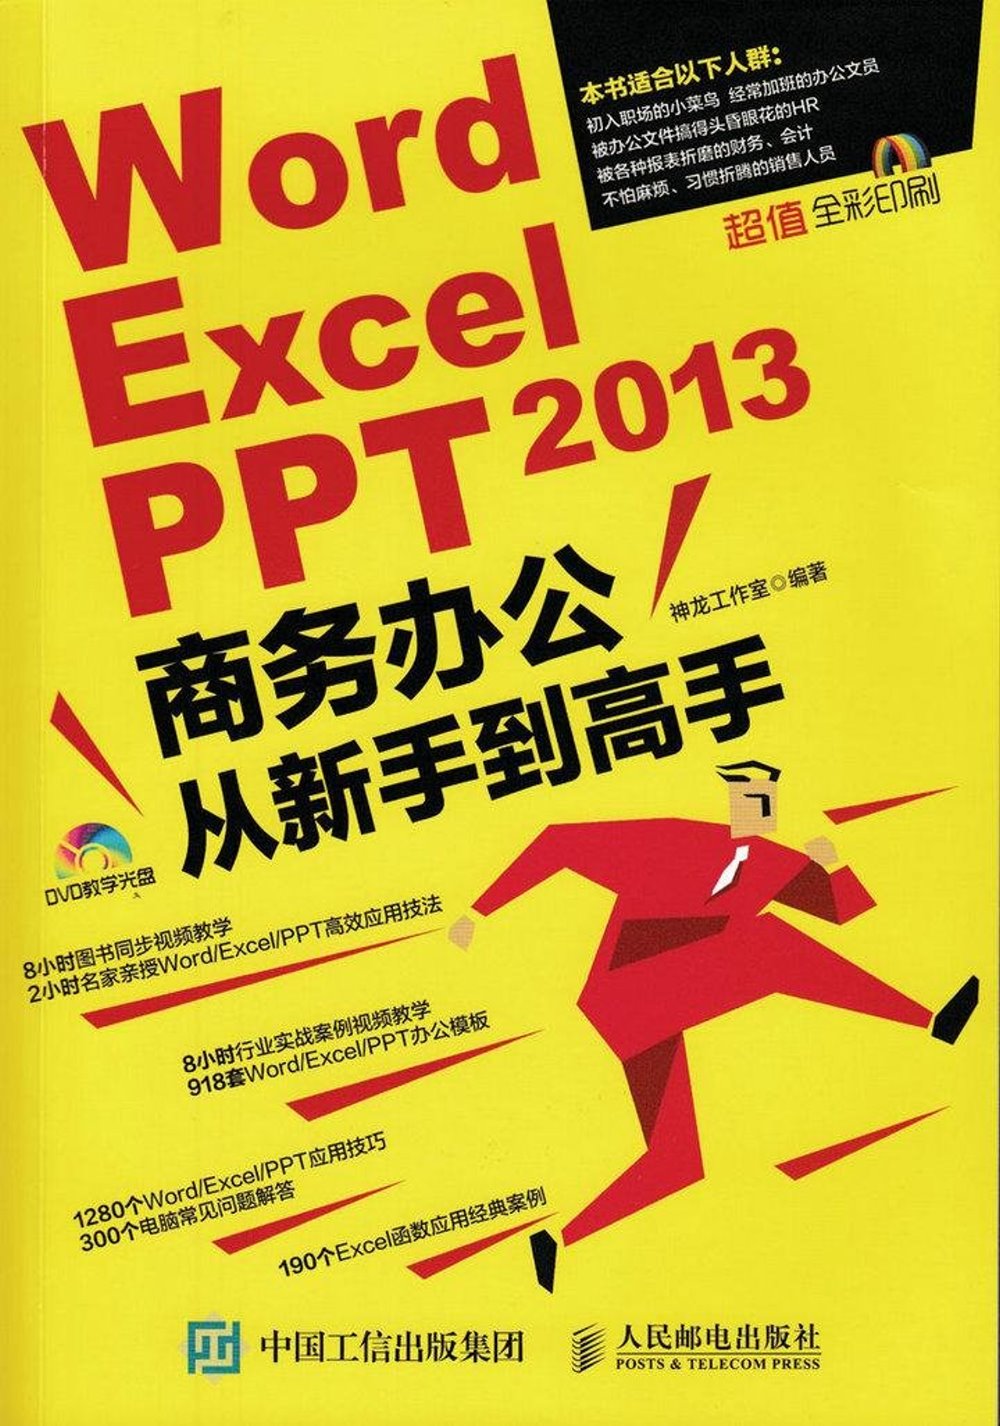 Word/Excel/PPT 2013商務辦公從新手到高手